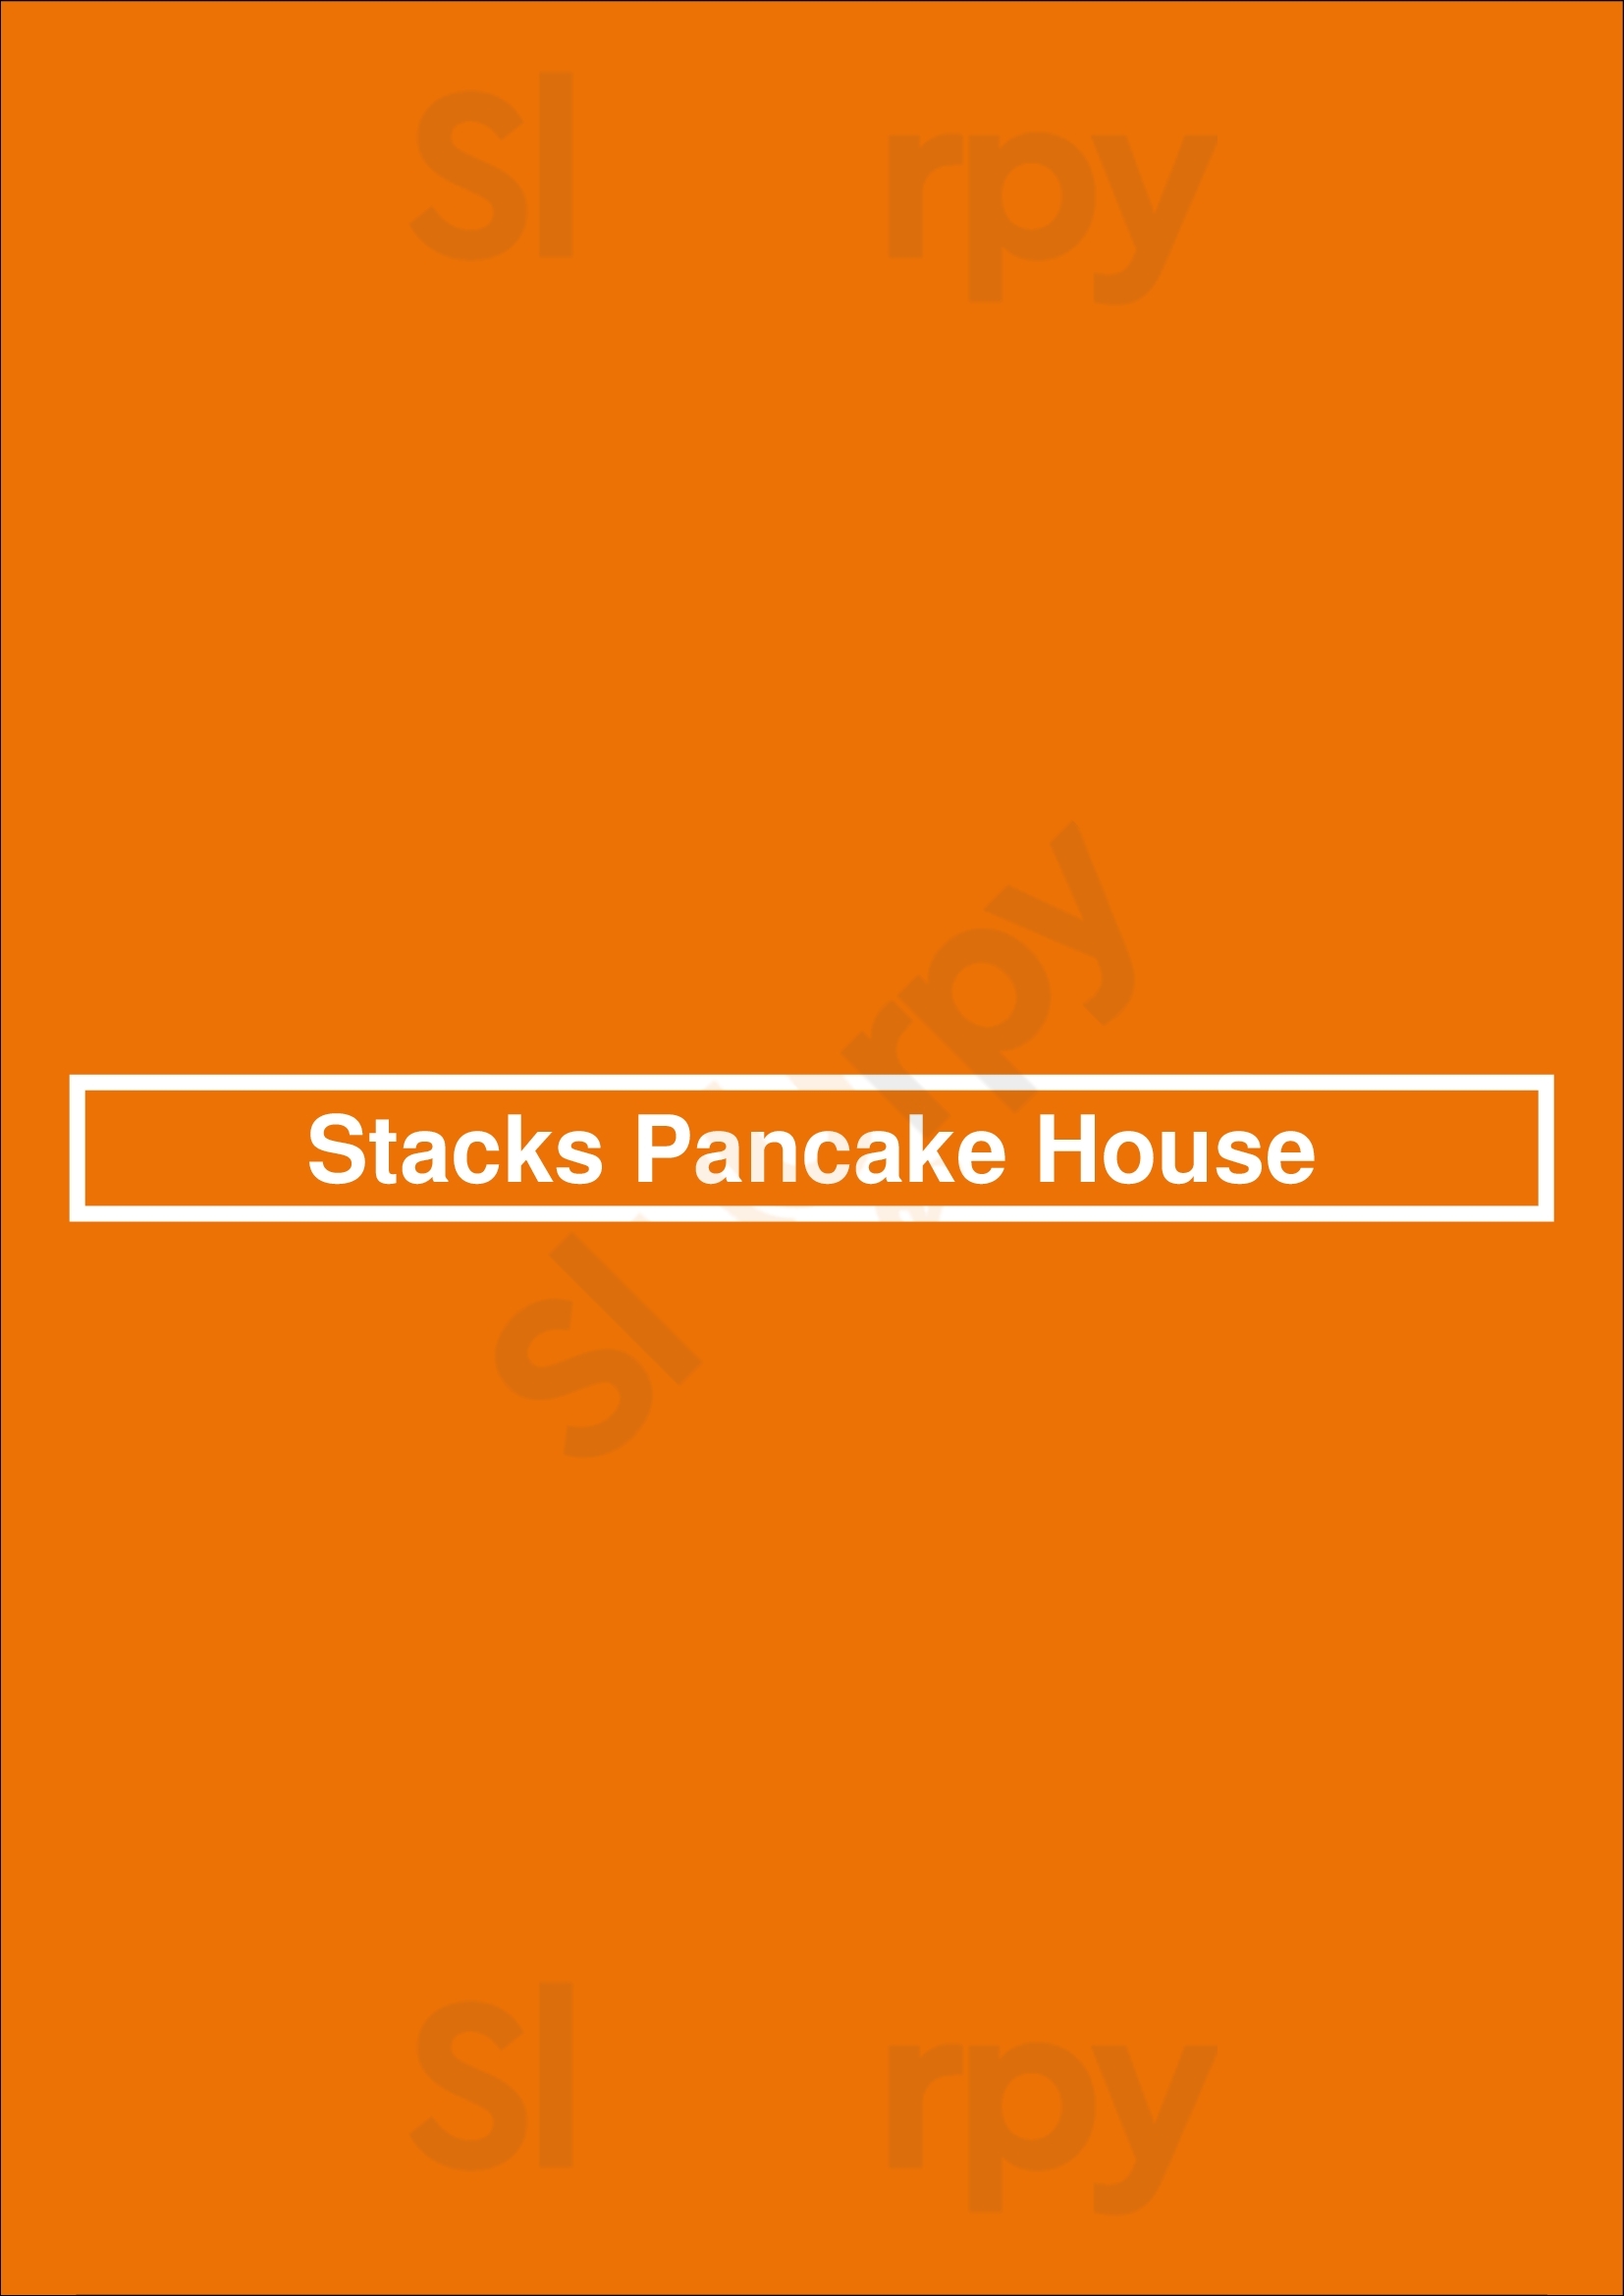 Stacks Pancake House Newport Beach Menu - 1